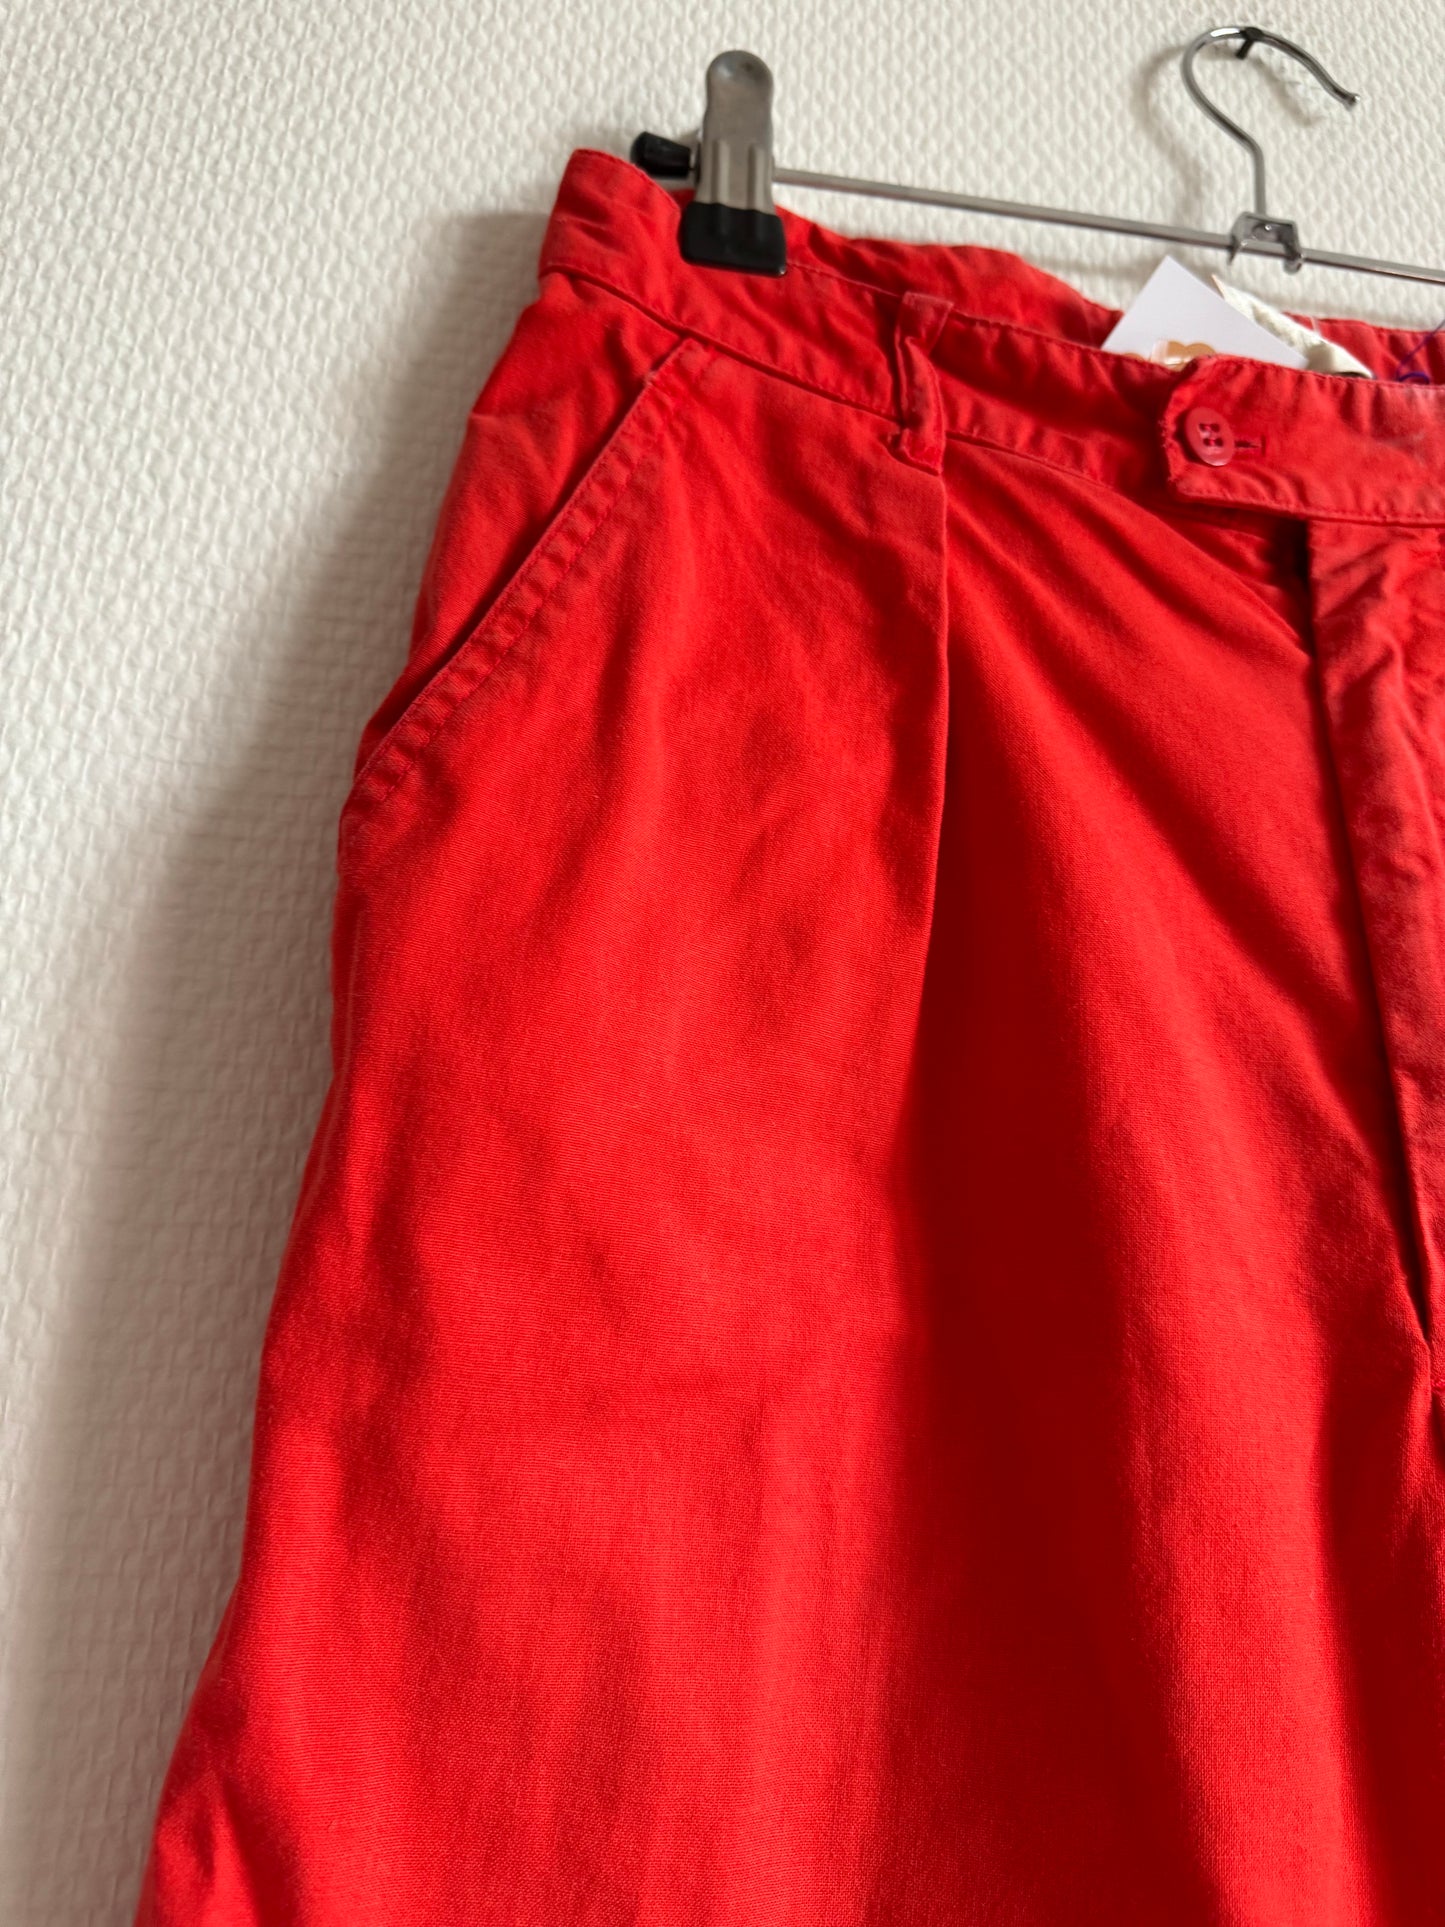 Pantalon rouge 80s